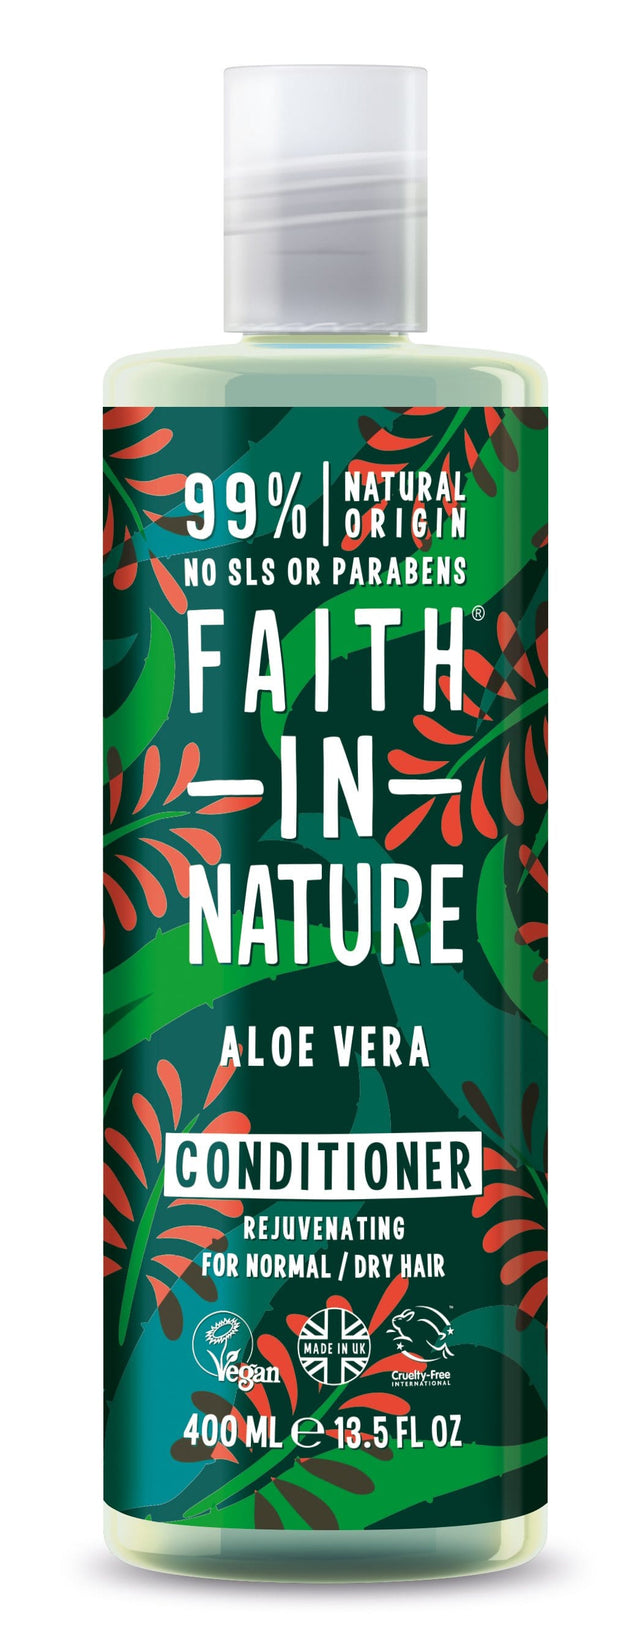 Faith In Nature Aloe Vera Conditioner, 400ml